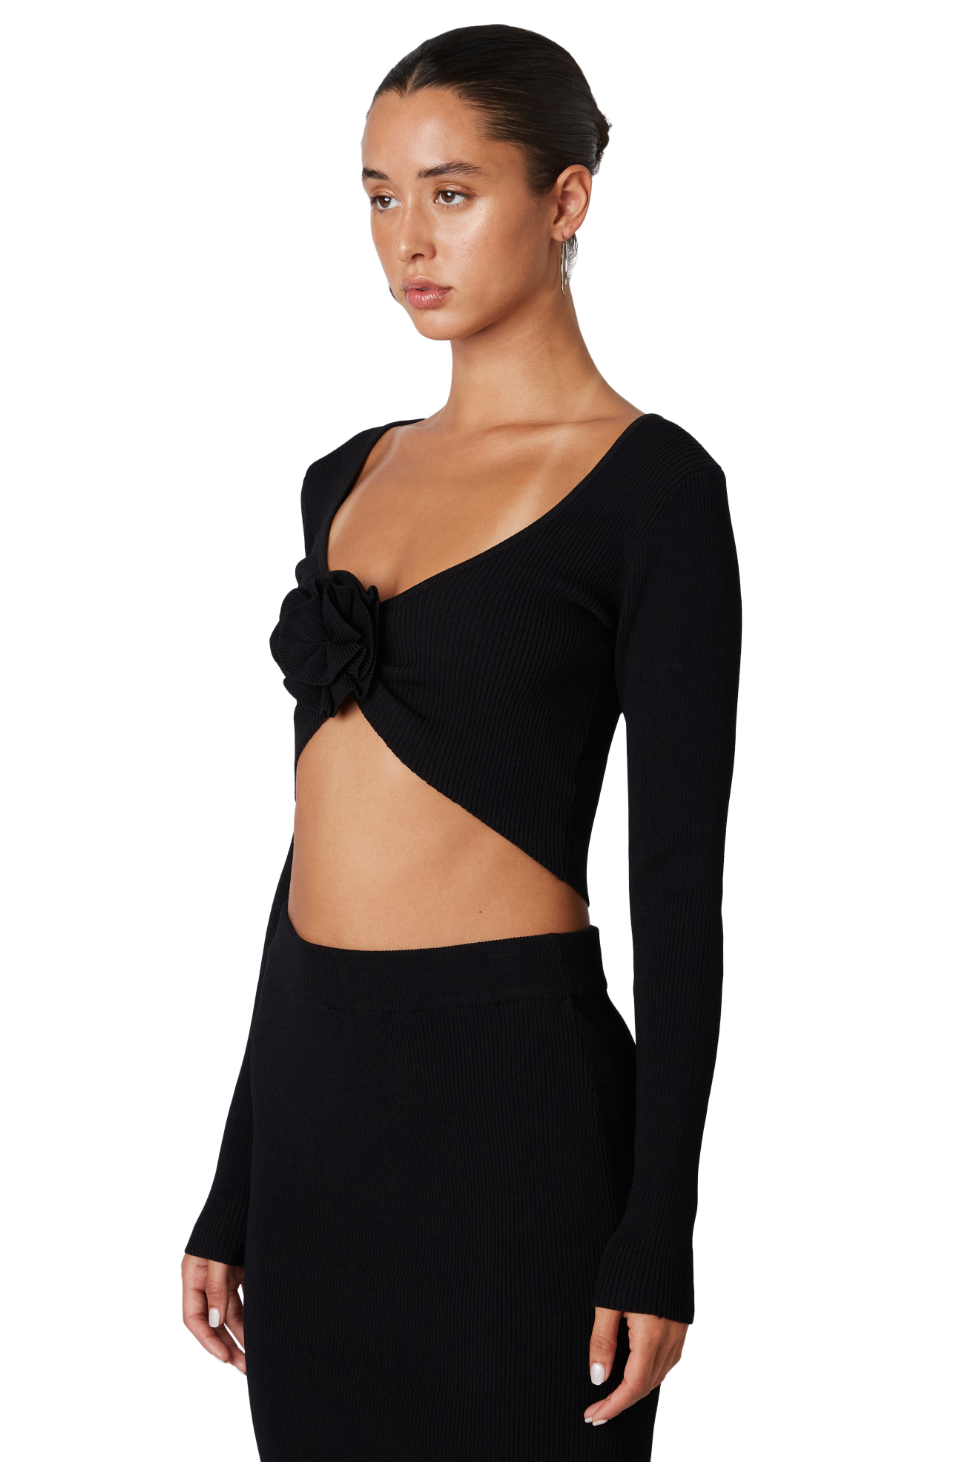 Monmartre Sweater Top Black, Long Blouse by Nia | LIT Boutique